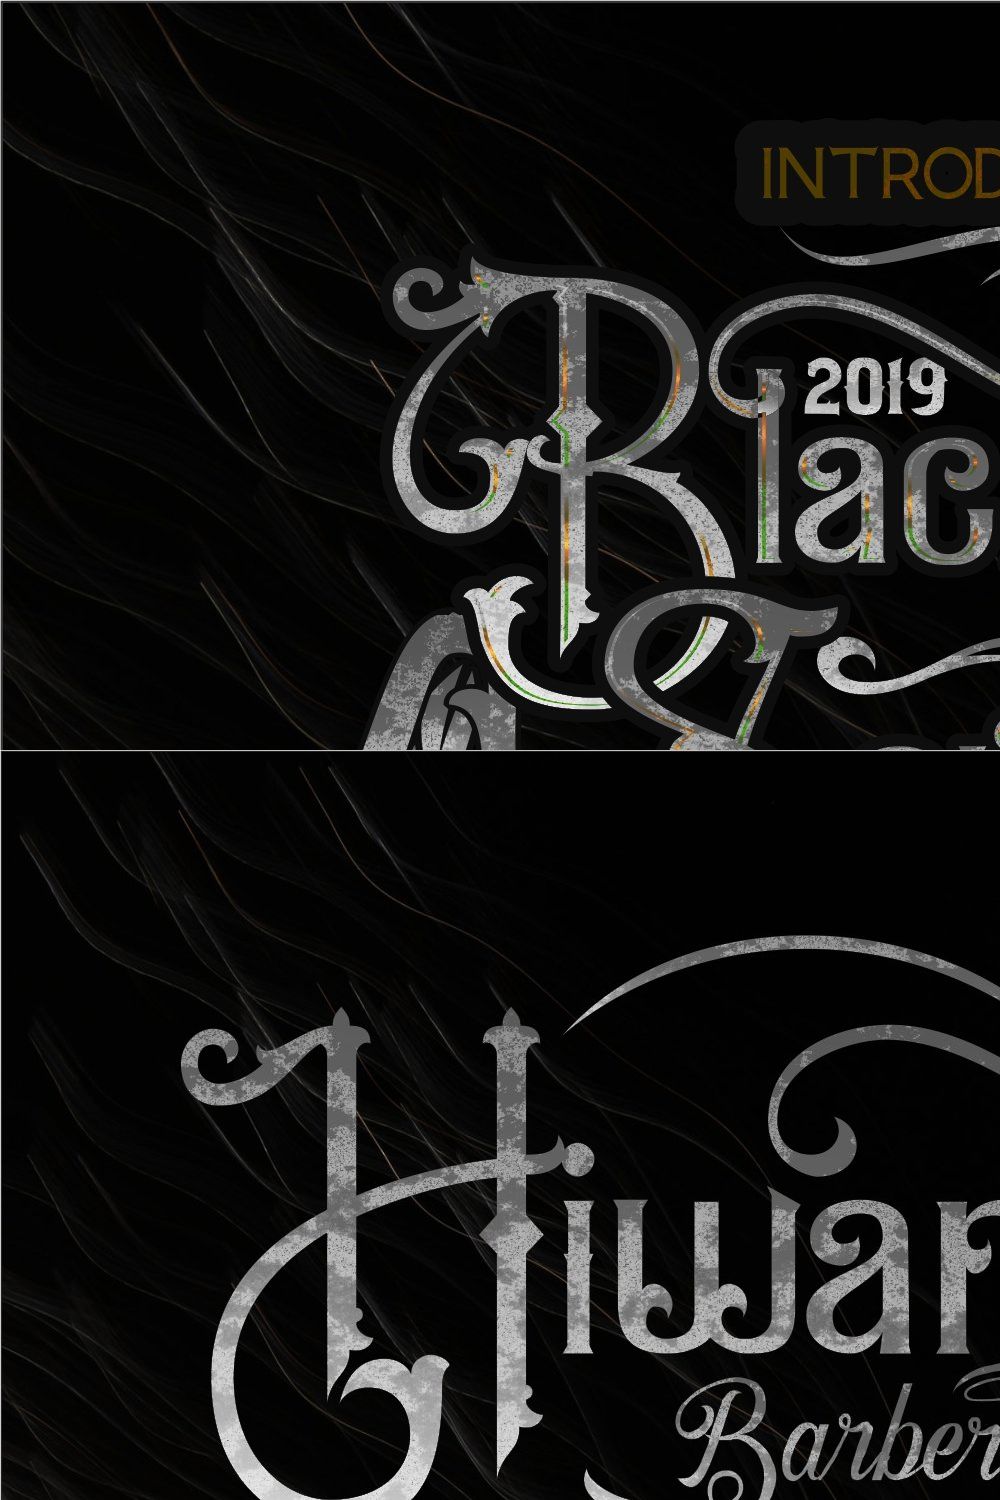 Black Savior Victorian retro Font pinterest preview image.